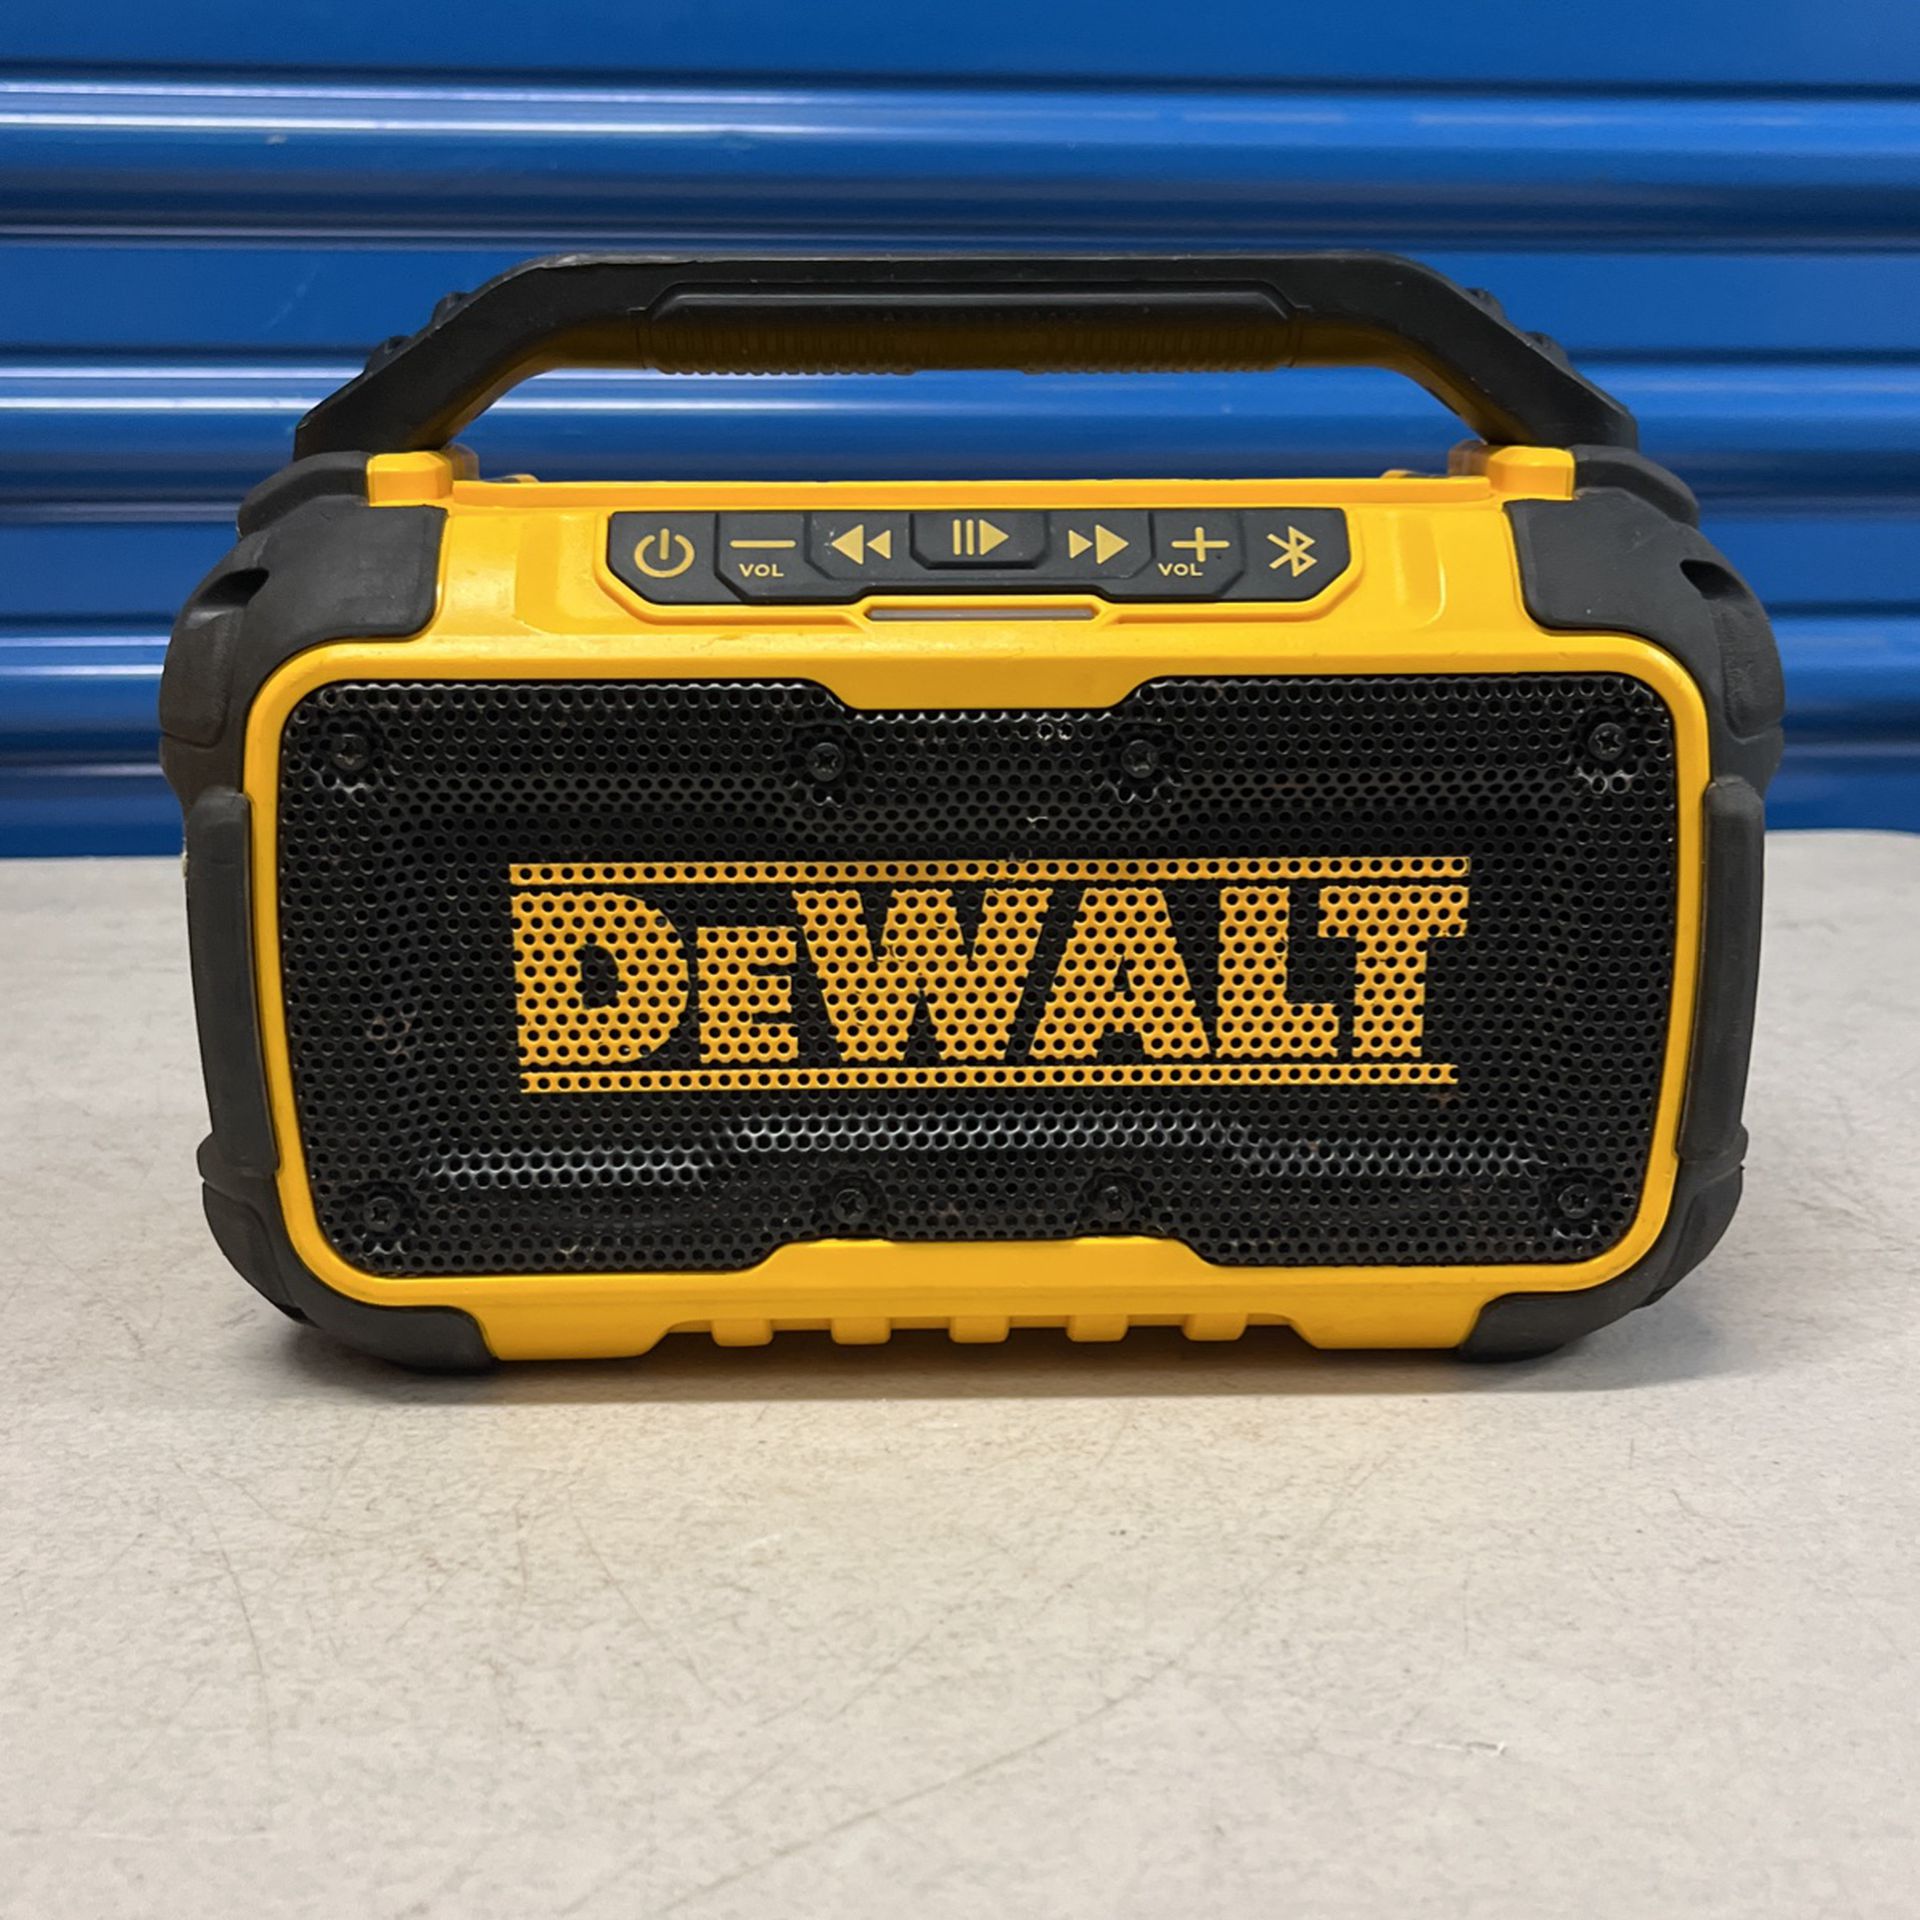 Dewalt Bluetooth Speaker 